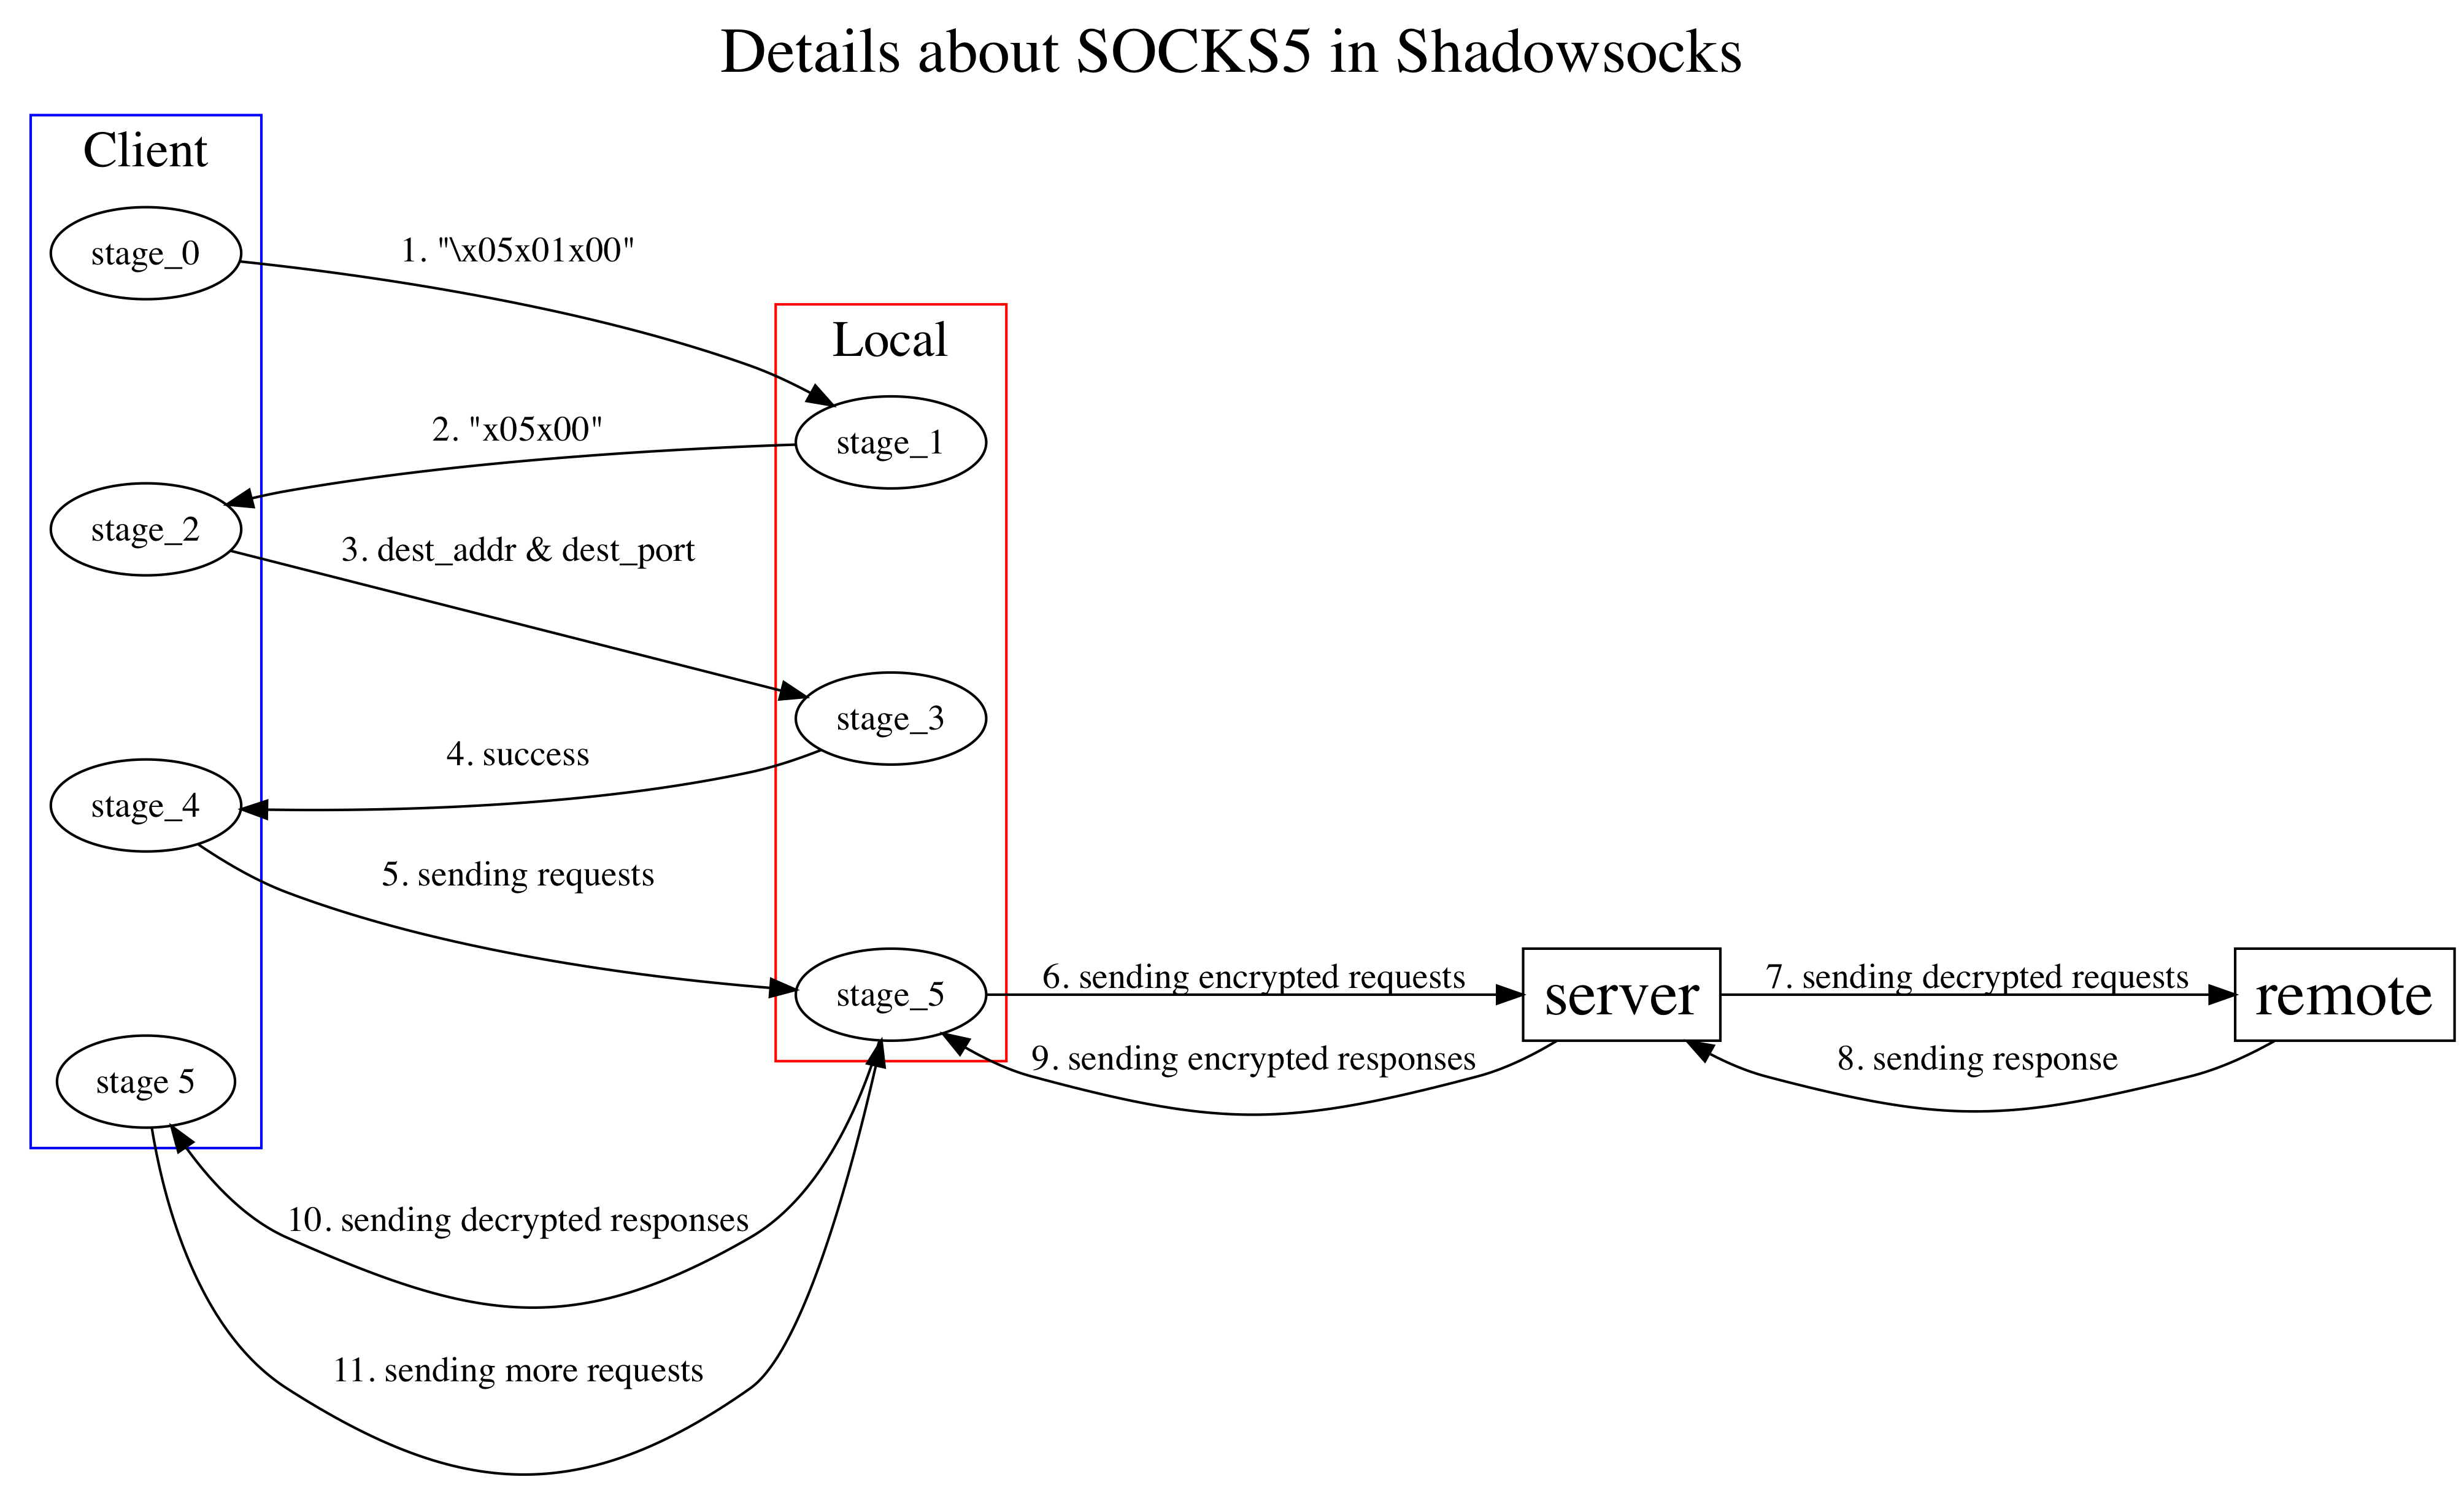 shadowsocks_socks5_details